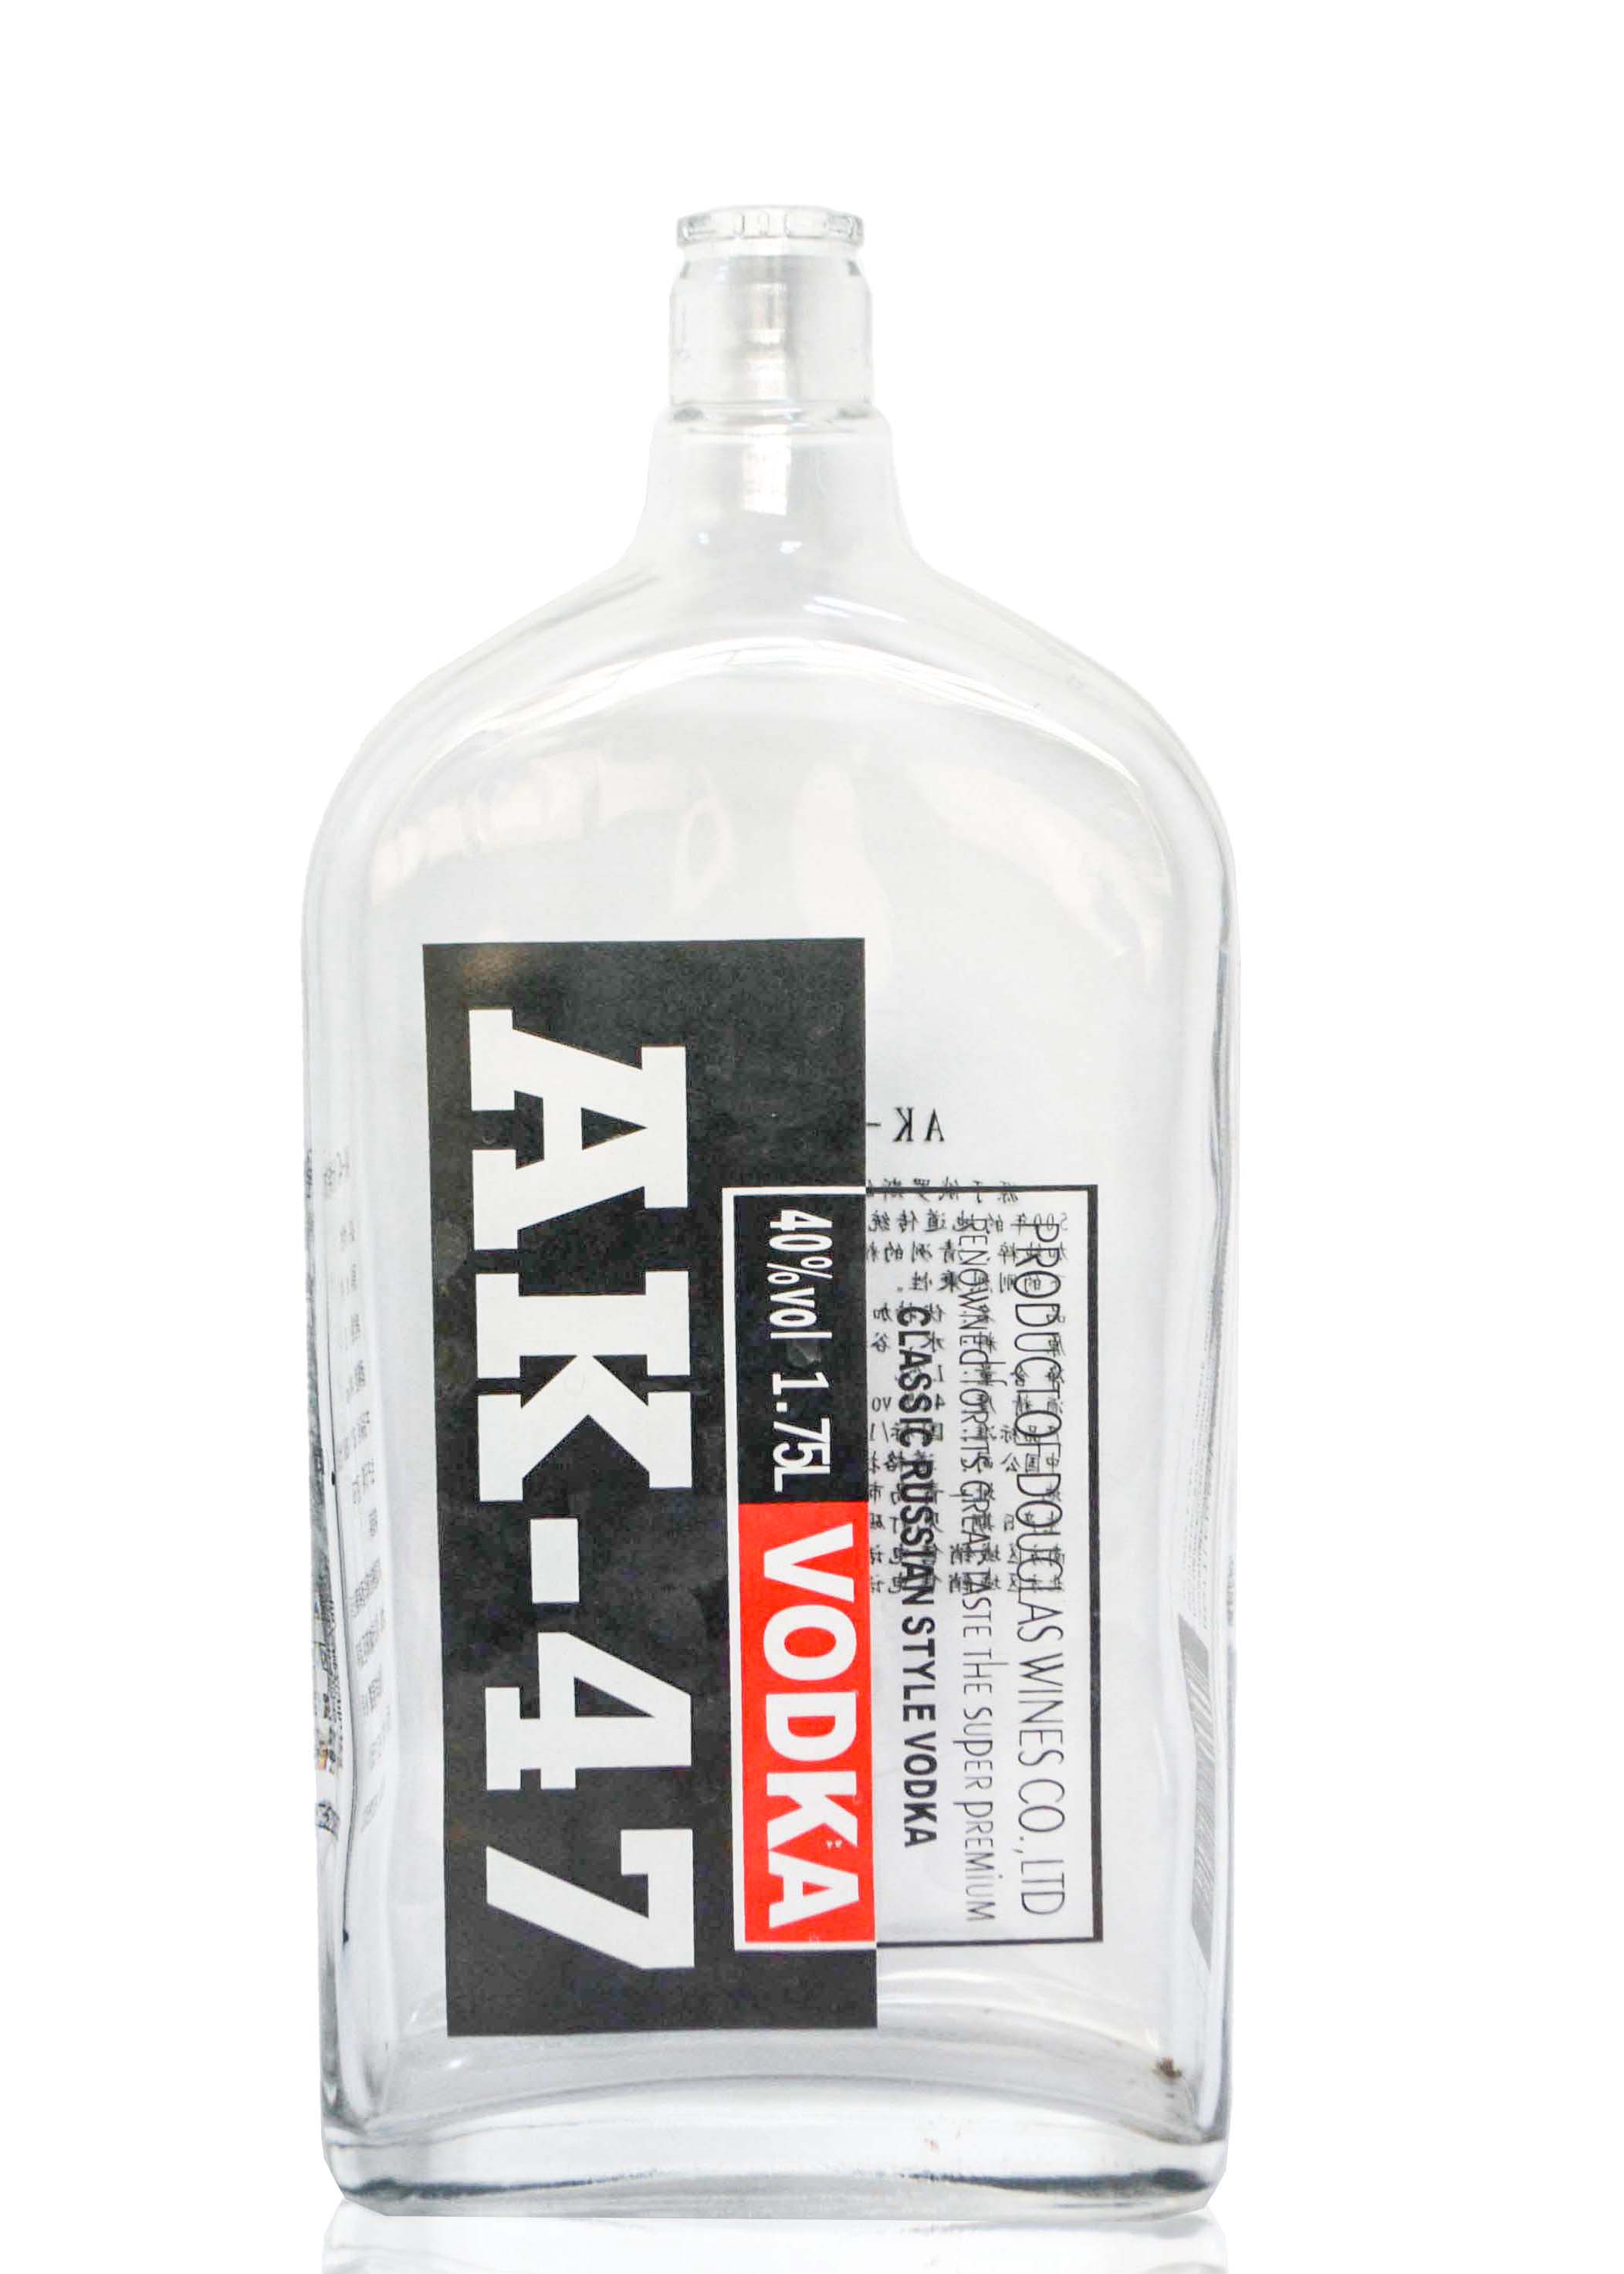 1.75L vodka bottle sizes empty glass bottles 